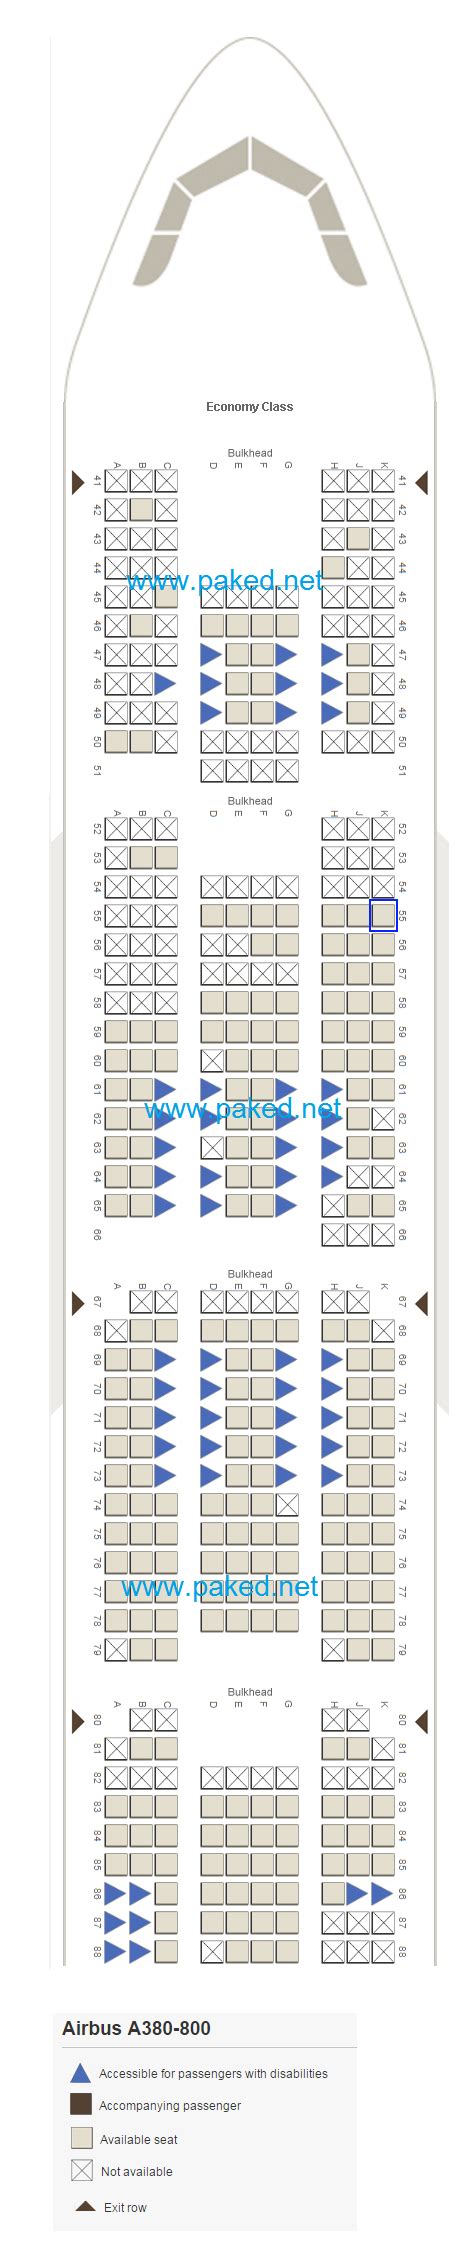 Emirates Airbus A Seat Map Updated Find The Best Seat Seatmaps Sexiz Pix